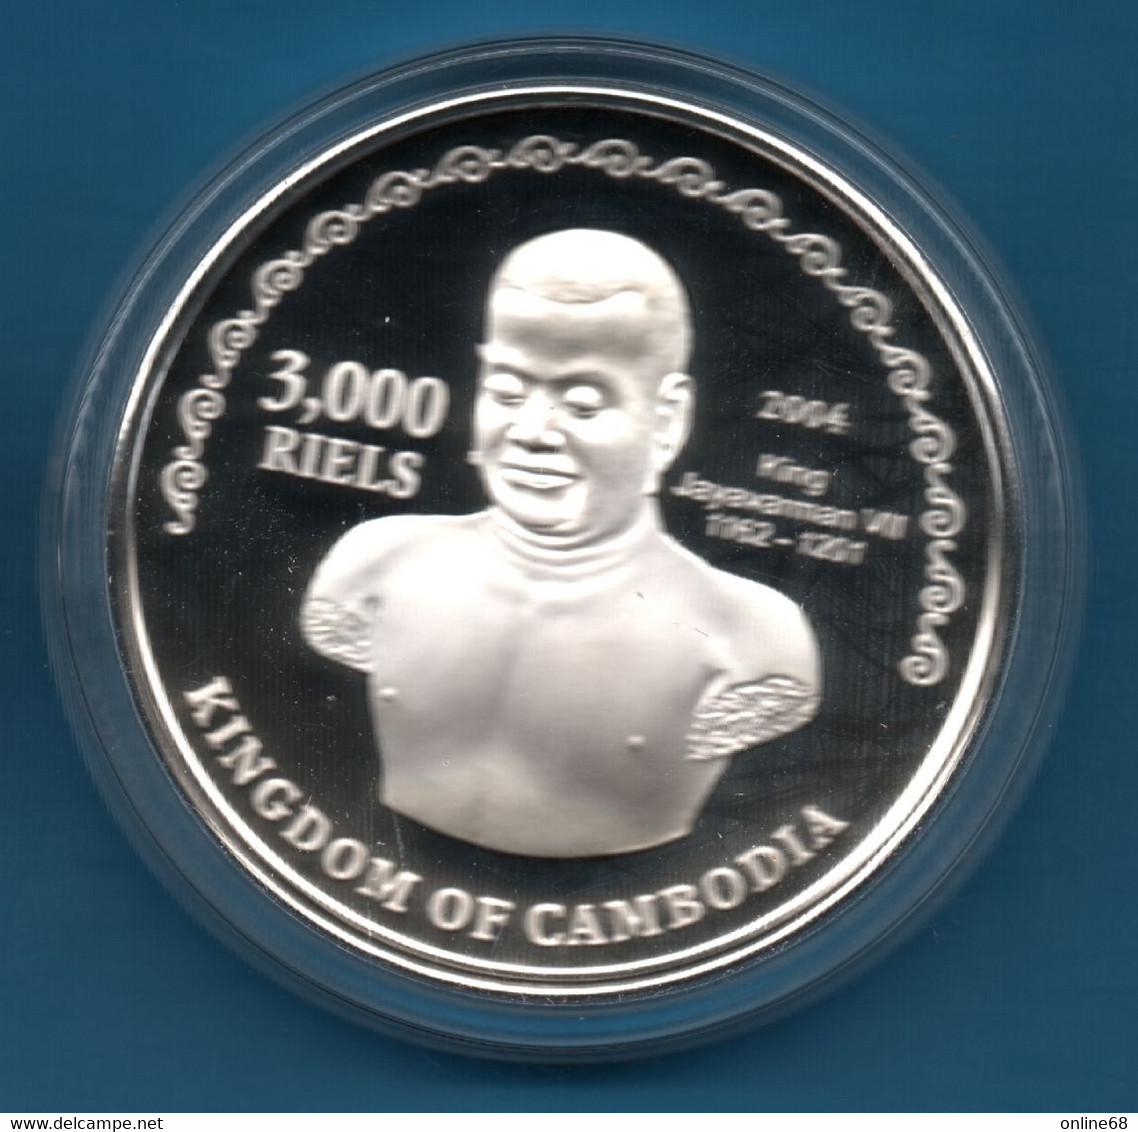 CAMBODIA 3000 RIELS 2004 KM# 139 Silver .999 Argent 2006 FOOTBALL World Cup KING JAYAVAIMAN VII - Cambodia